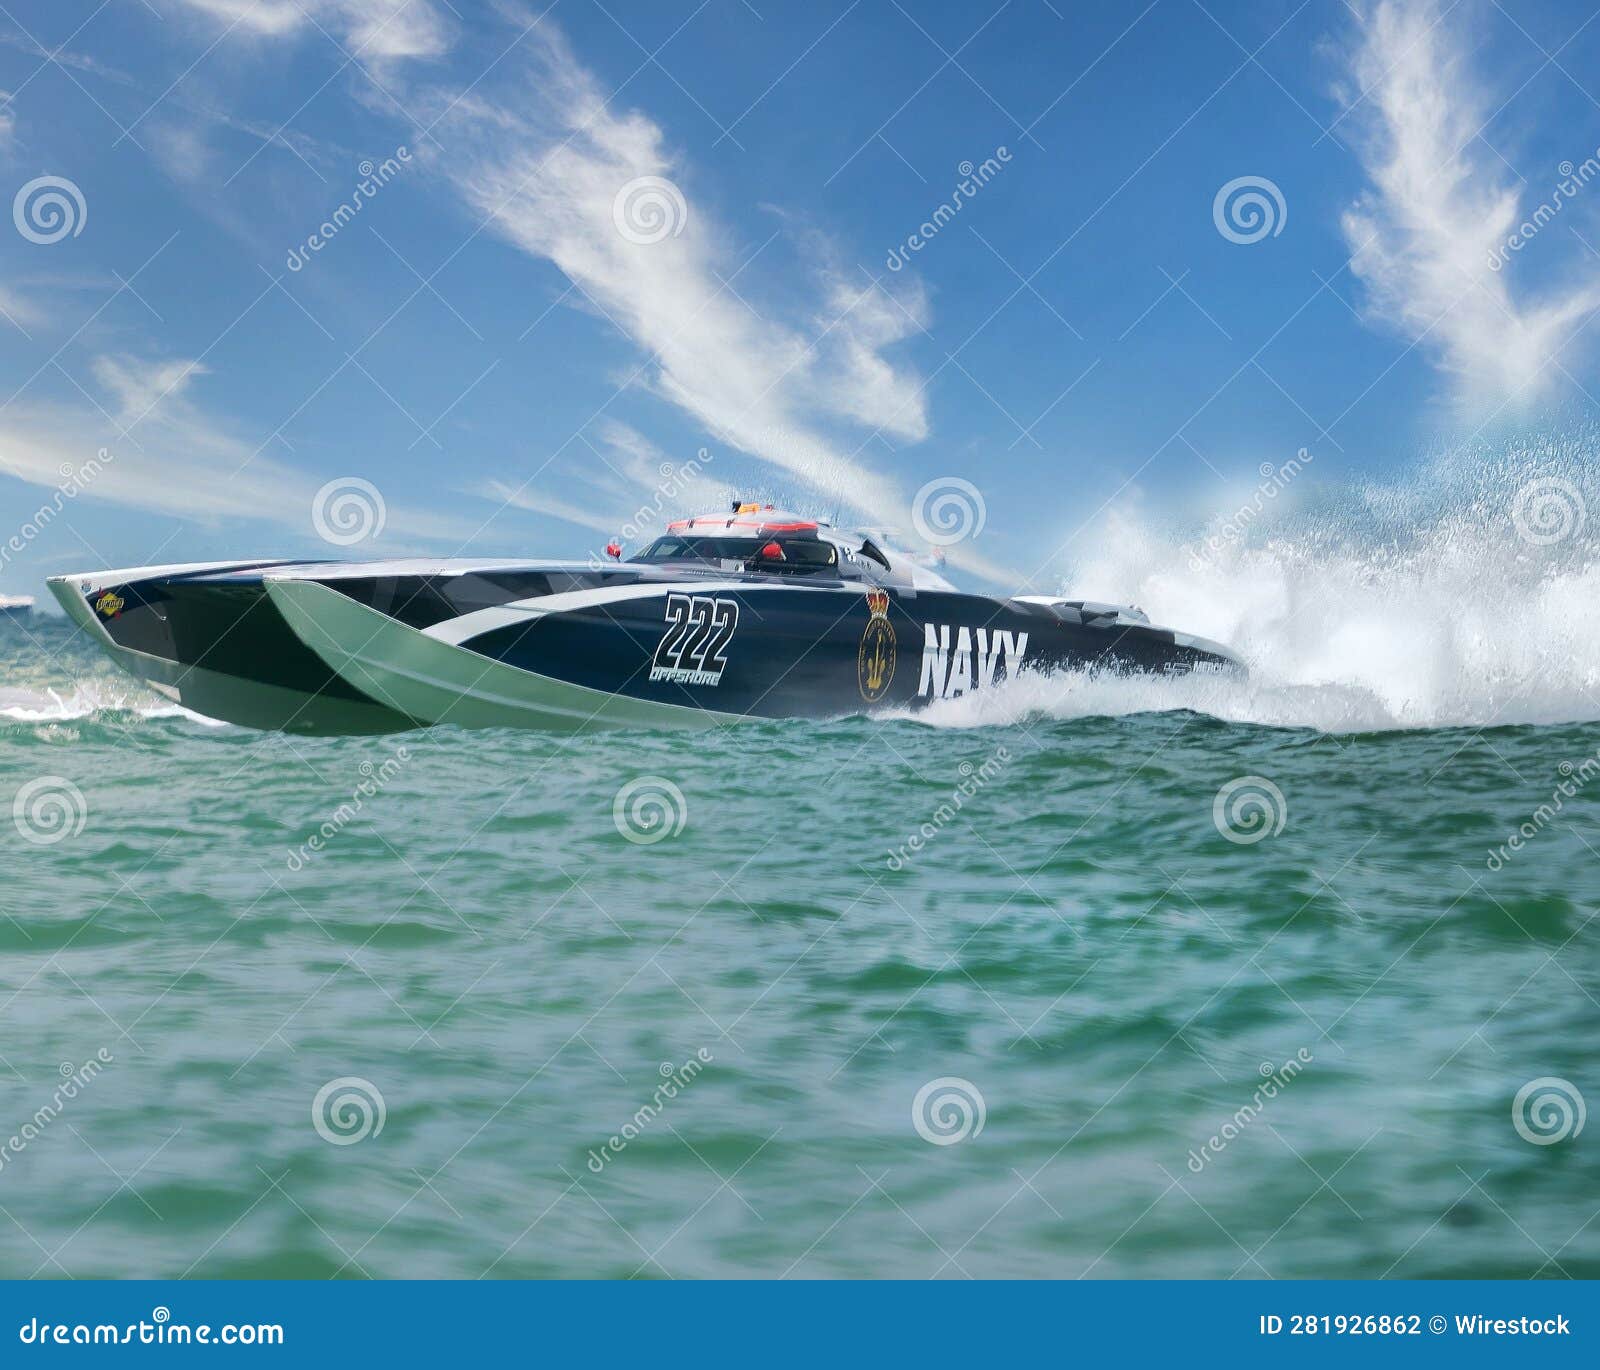 motorboat is racing